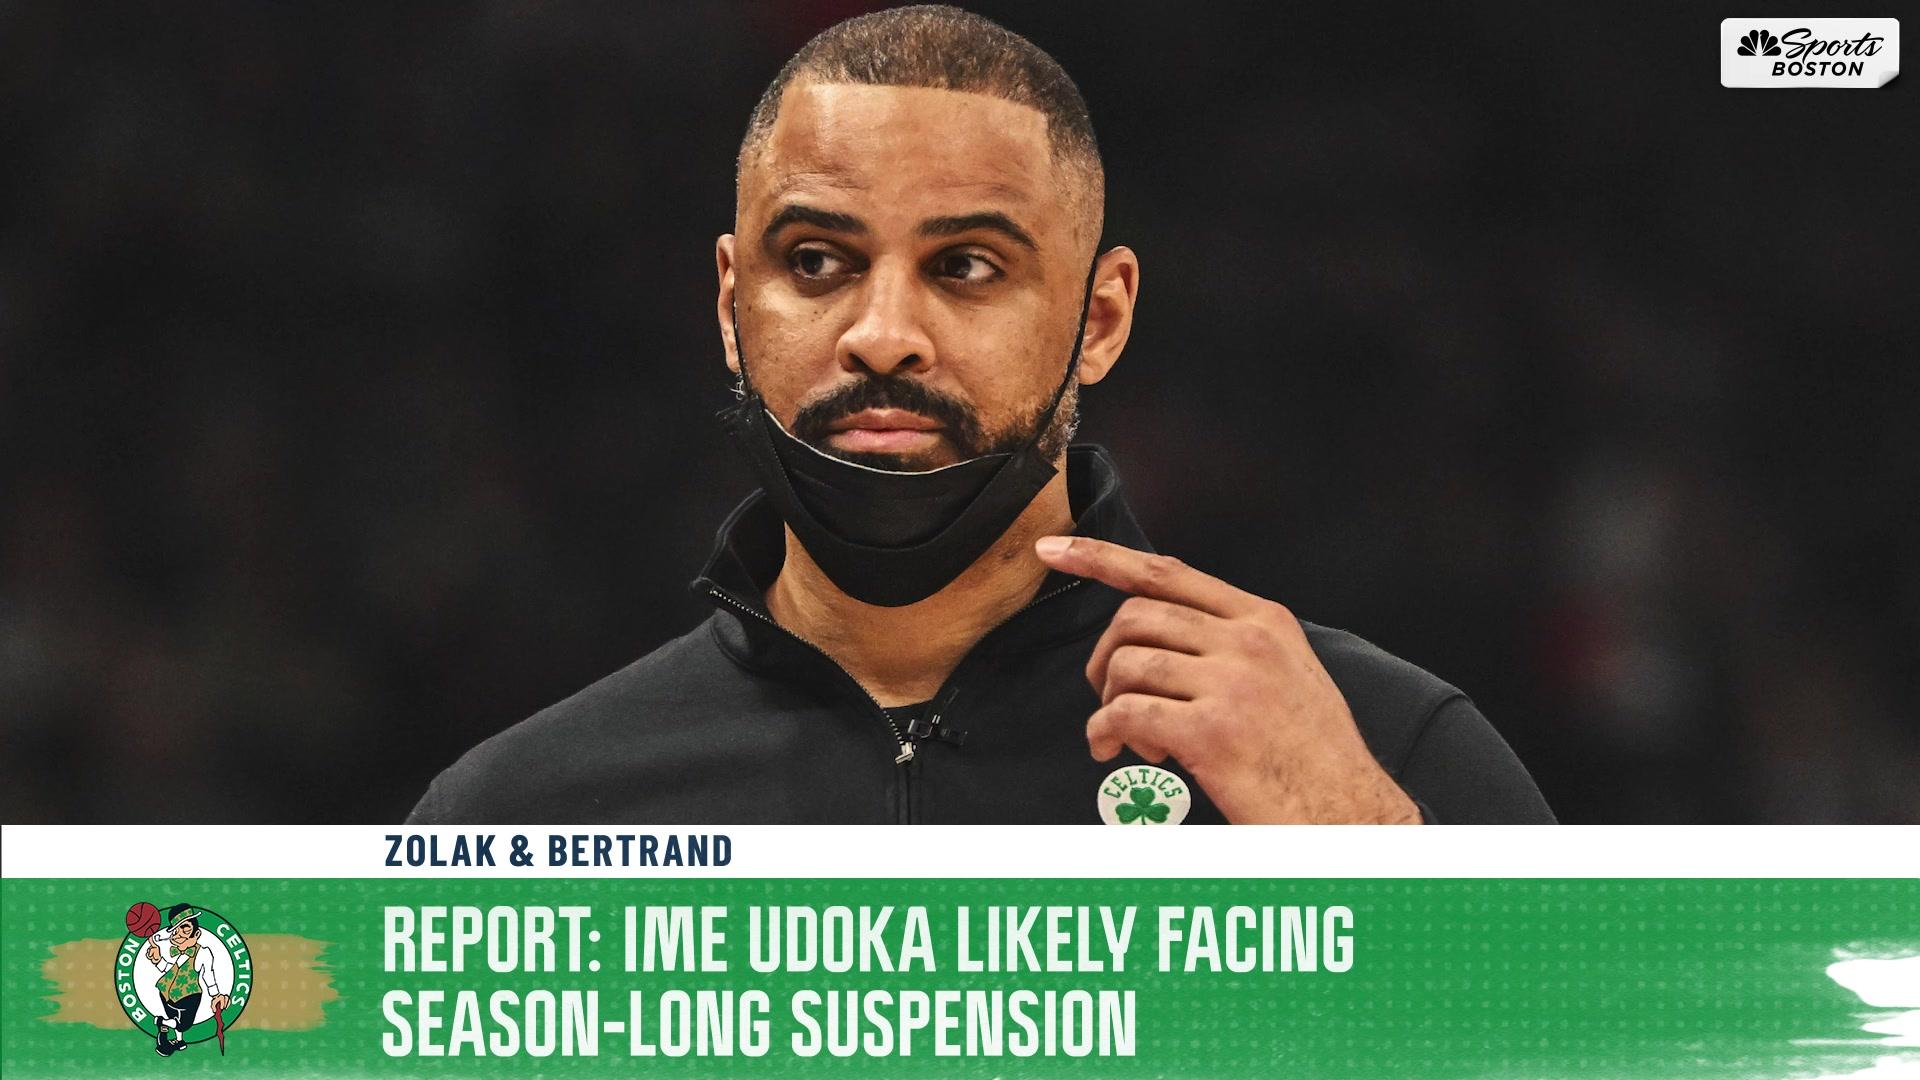 NBA Rumors: Celtics coach Ime Udoka facing suspension for violating team  rules - NBC Sports Boston